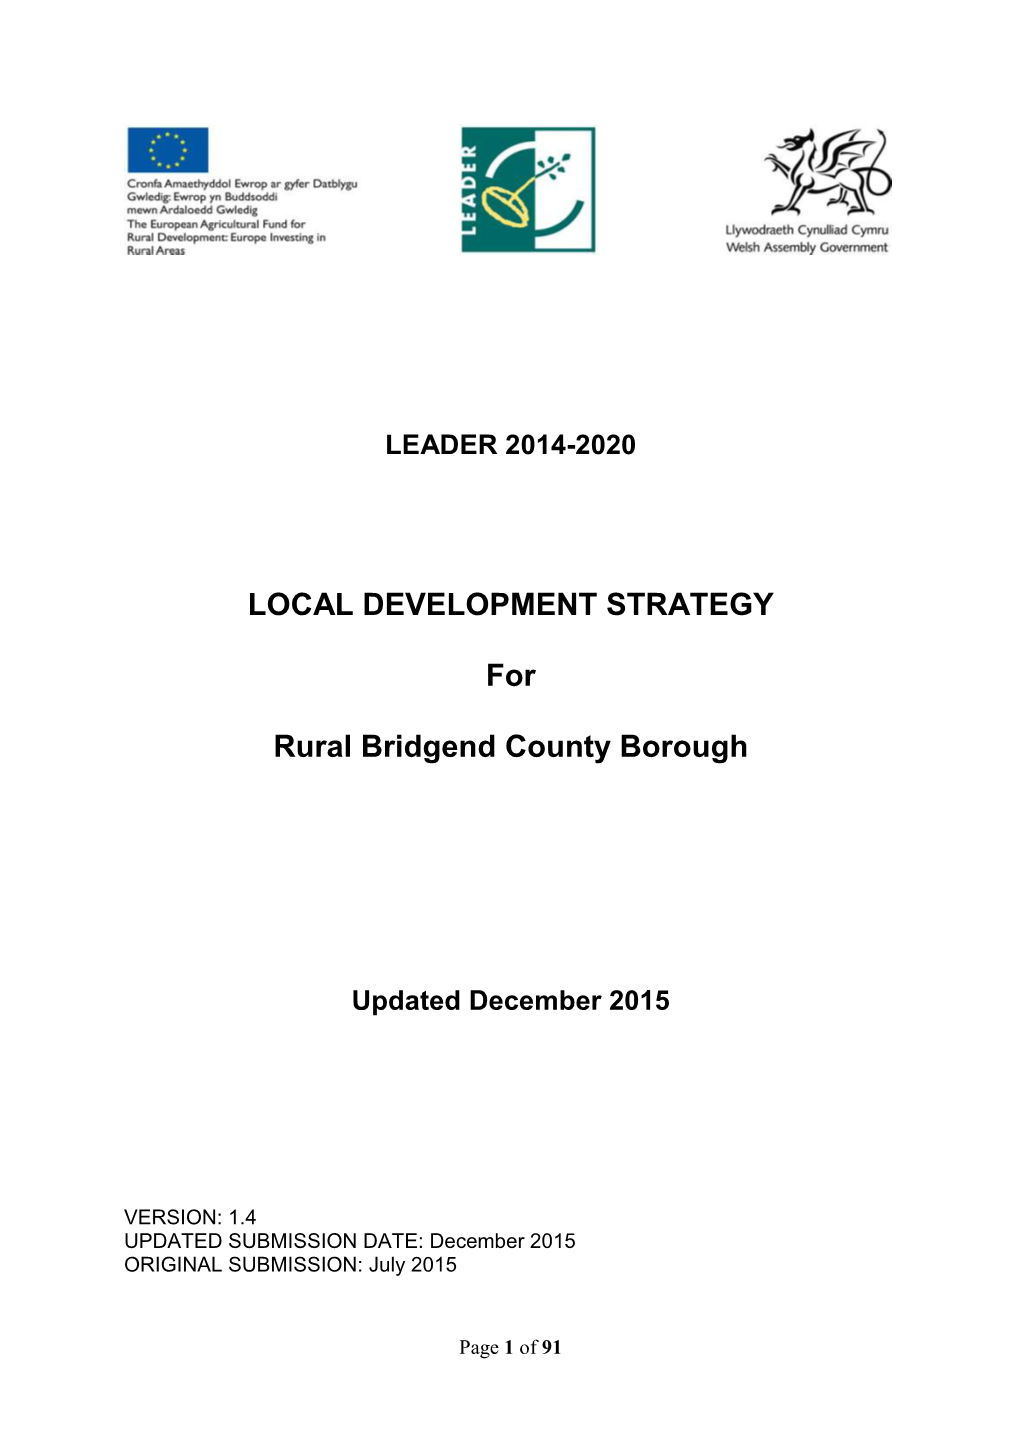 LOCAL DEVELOPMENT STRATEGY for Rural Bridgend County Borough